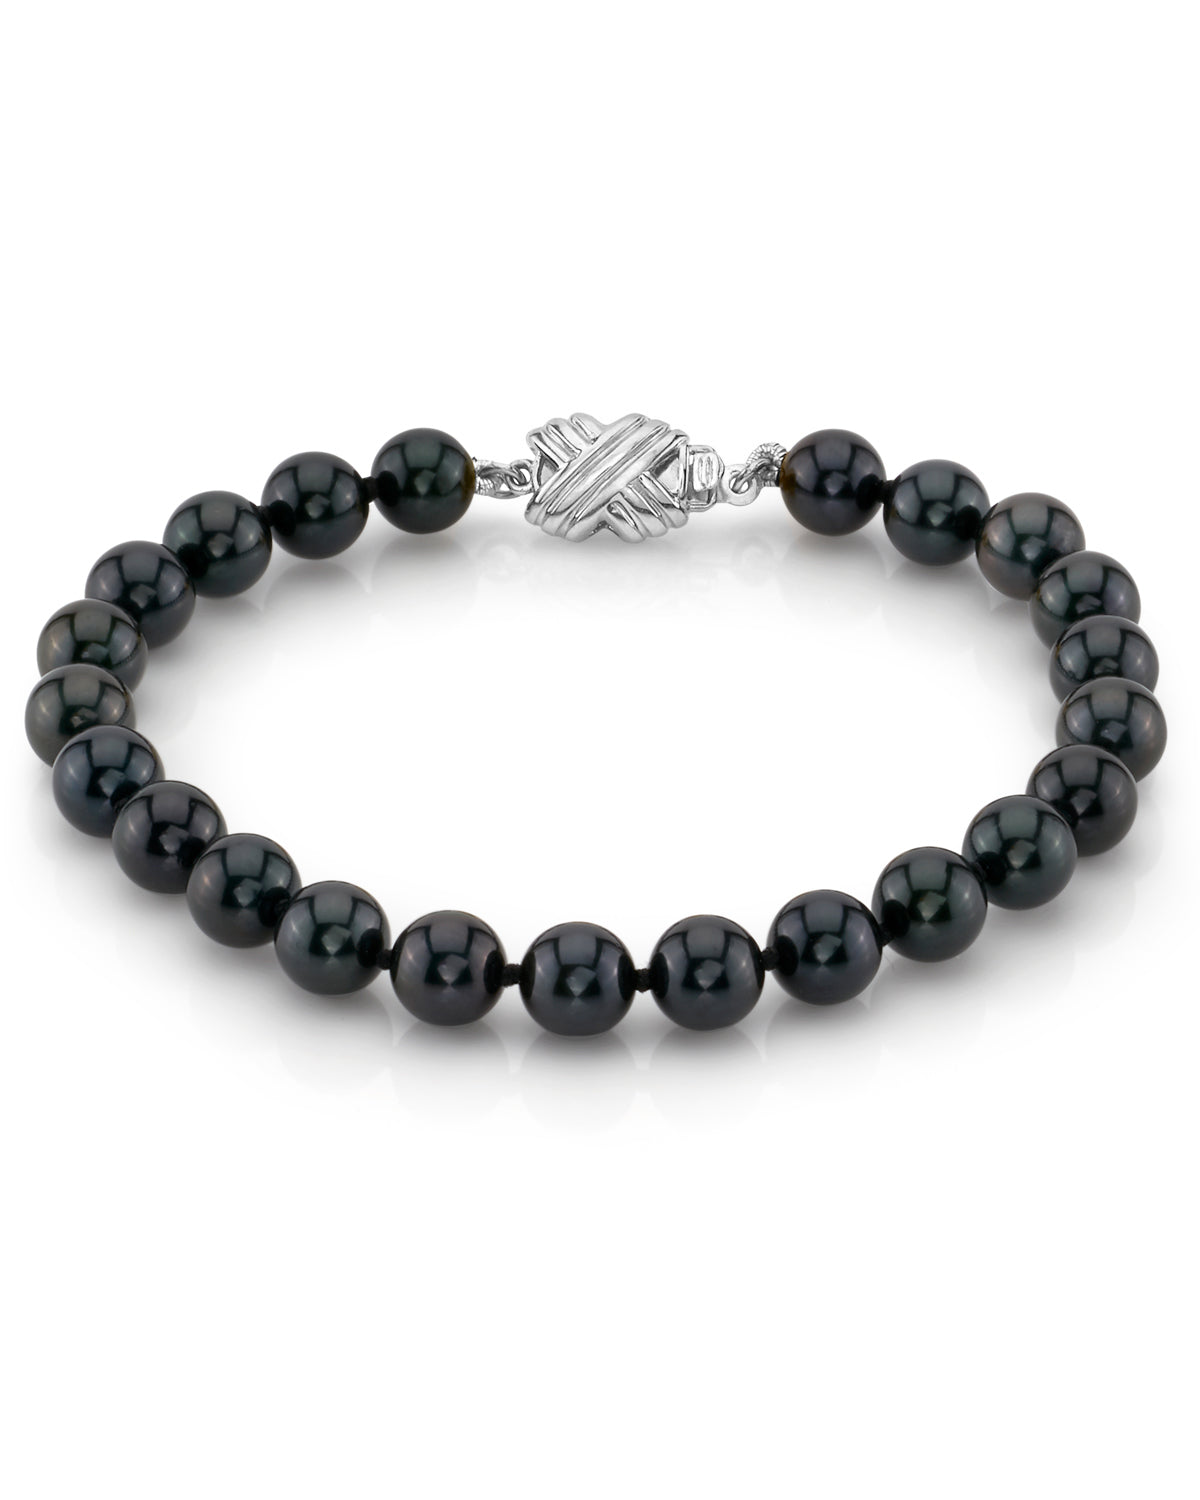 6.0-6.5mm Akoya Black Pearl Bracelet- Choose Your Quality